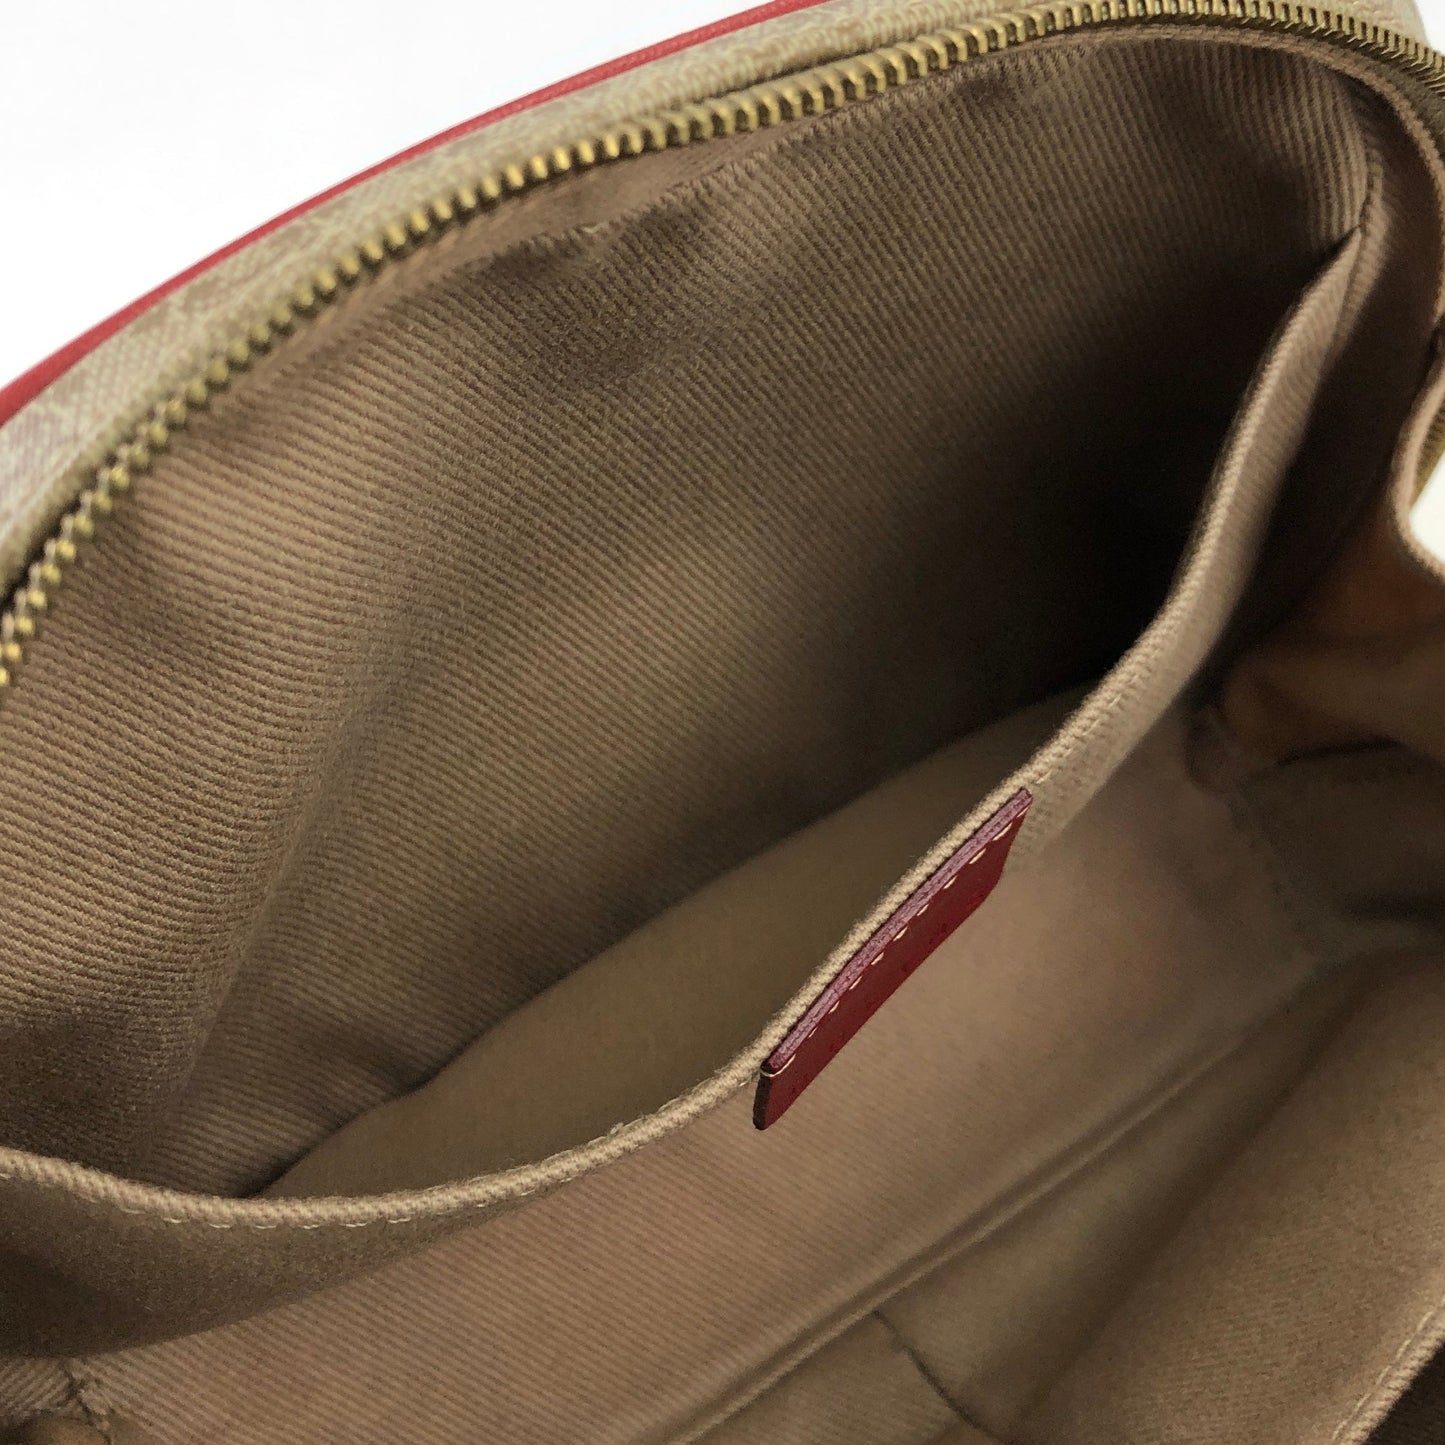 CELINE Macadam PVC leather mini bag vanity handbag red beige vintage old celine wswjnd